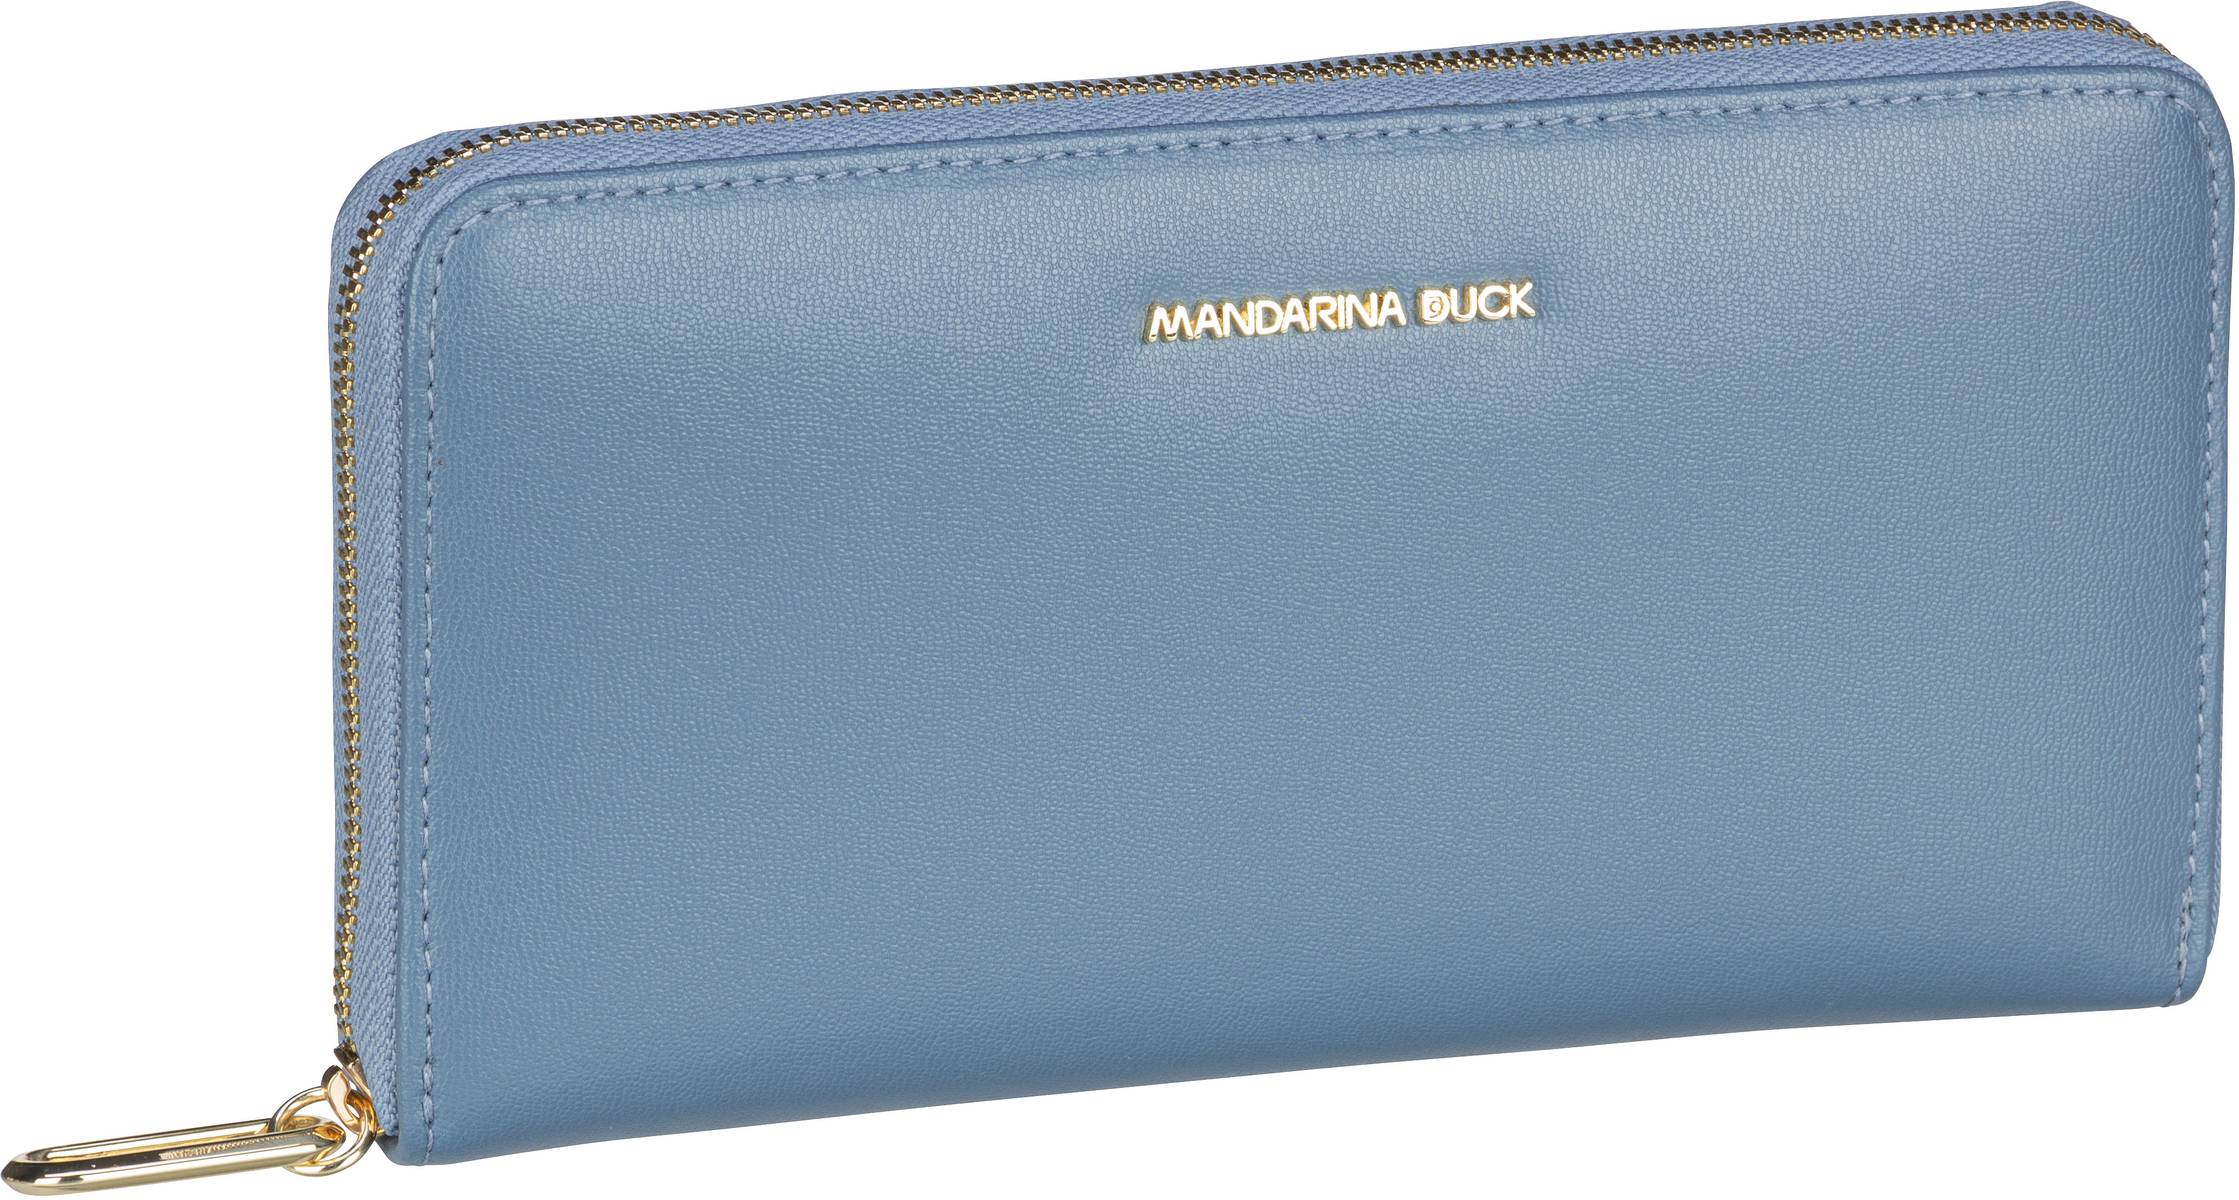 Mandarina Duck Luna Zip Around Wallet KBP61 - Waterfall